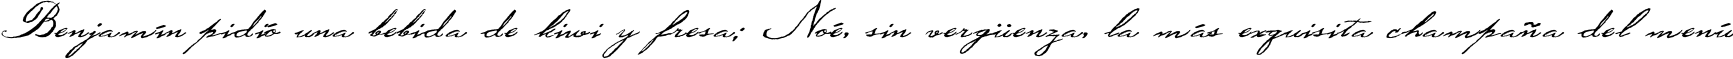 Пример написания шрифтом OldGlory текста на испанском